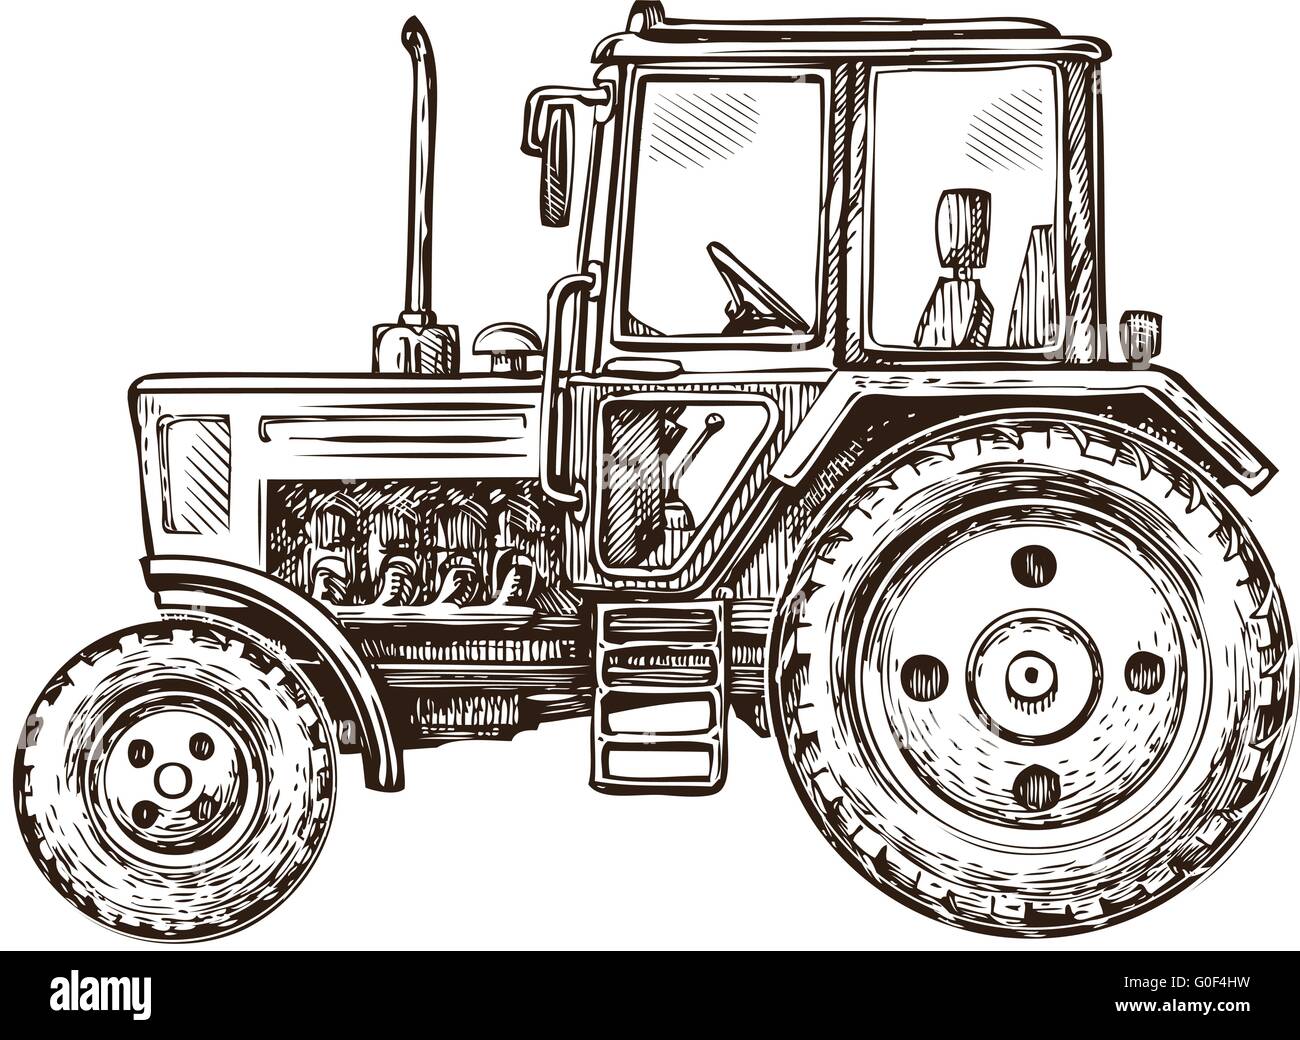 Bauernhof Traktor Skizze. Handgezeichnete Vektor-illustration Stock Vektor